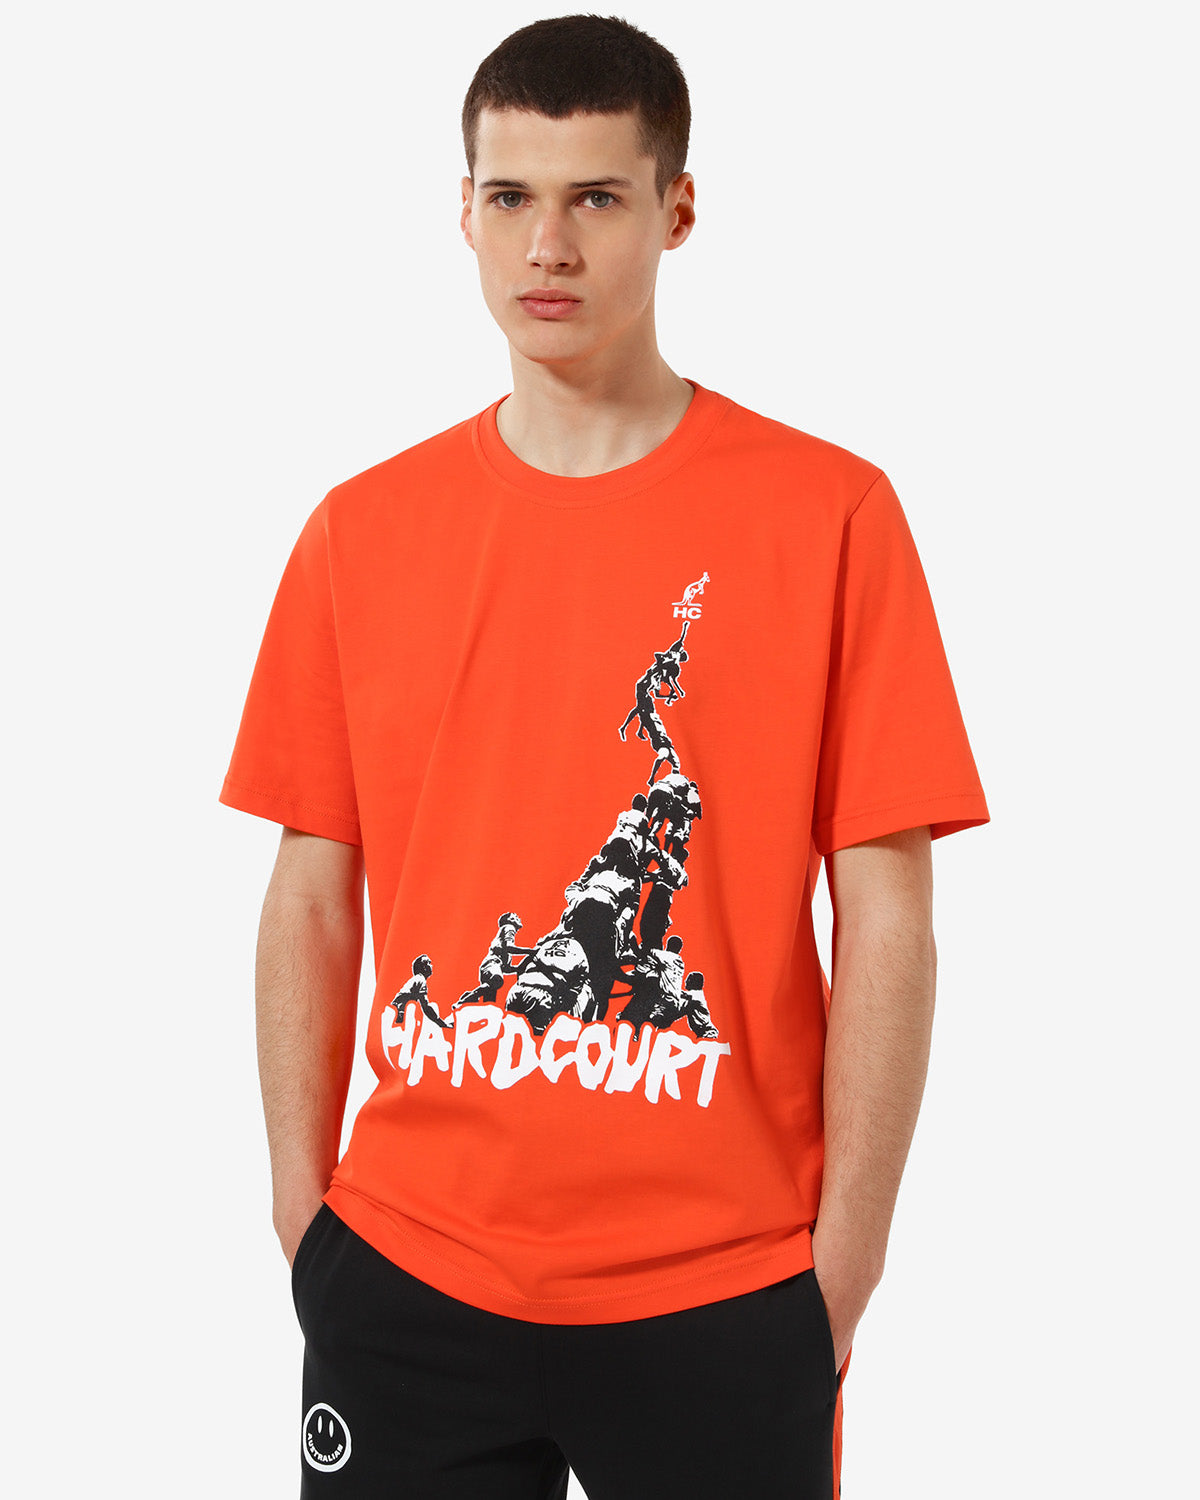 Pyramid T-Shirt: Australian Hard Court